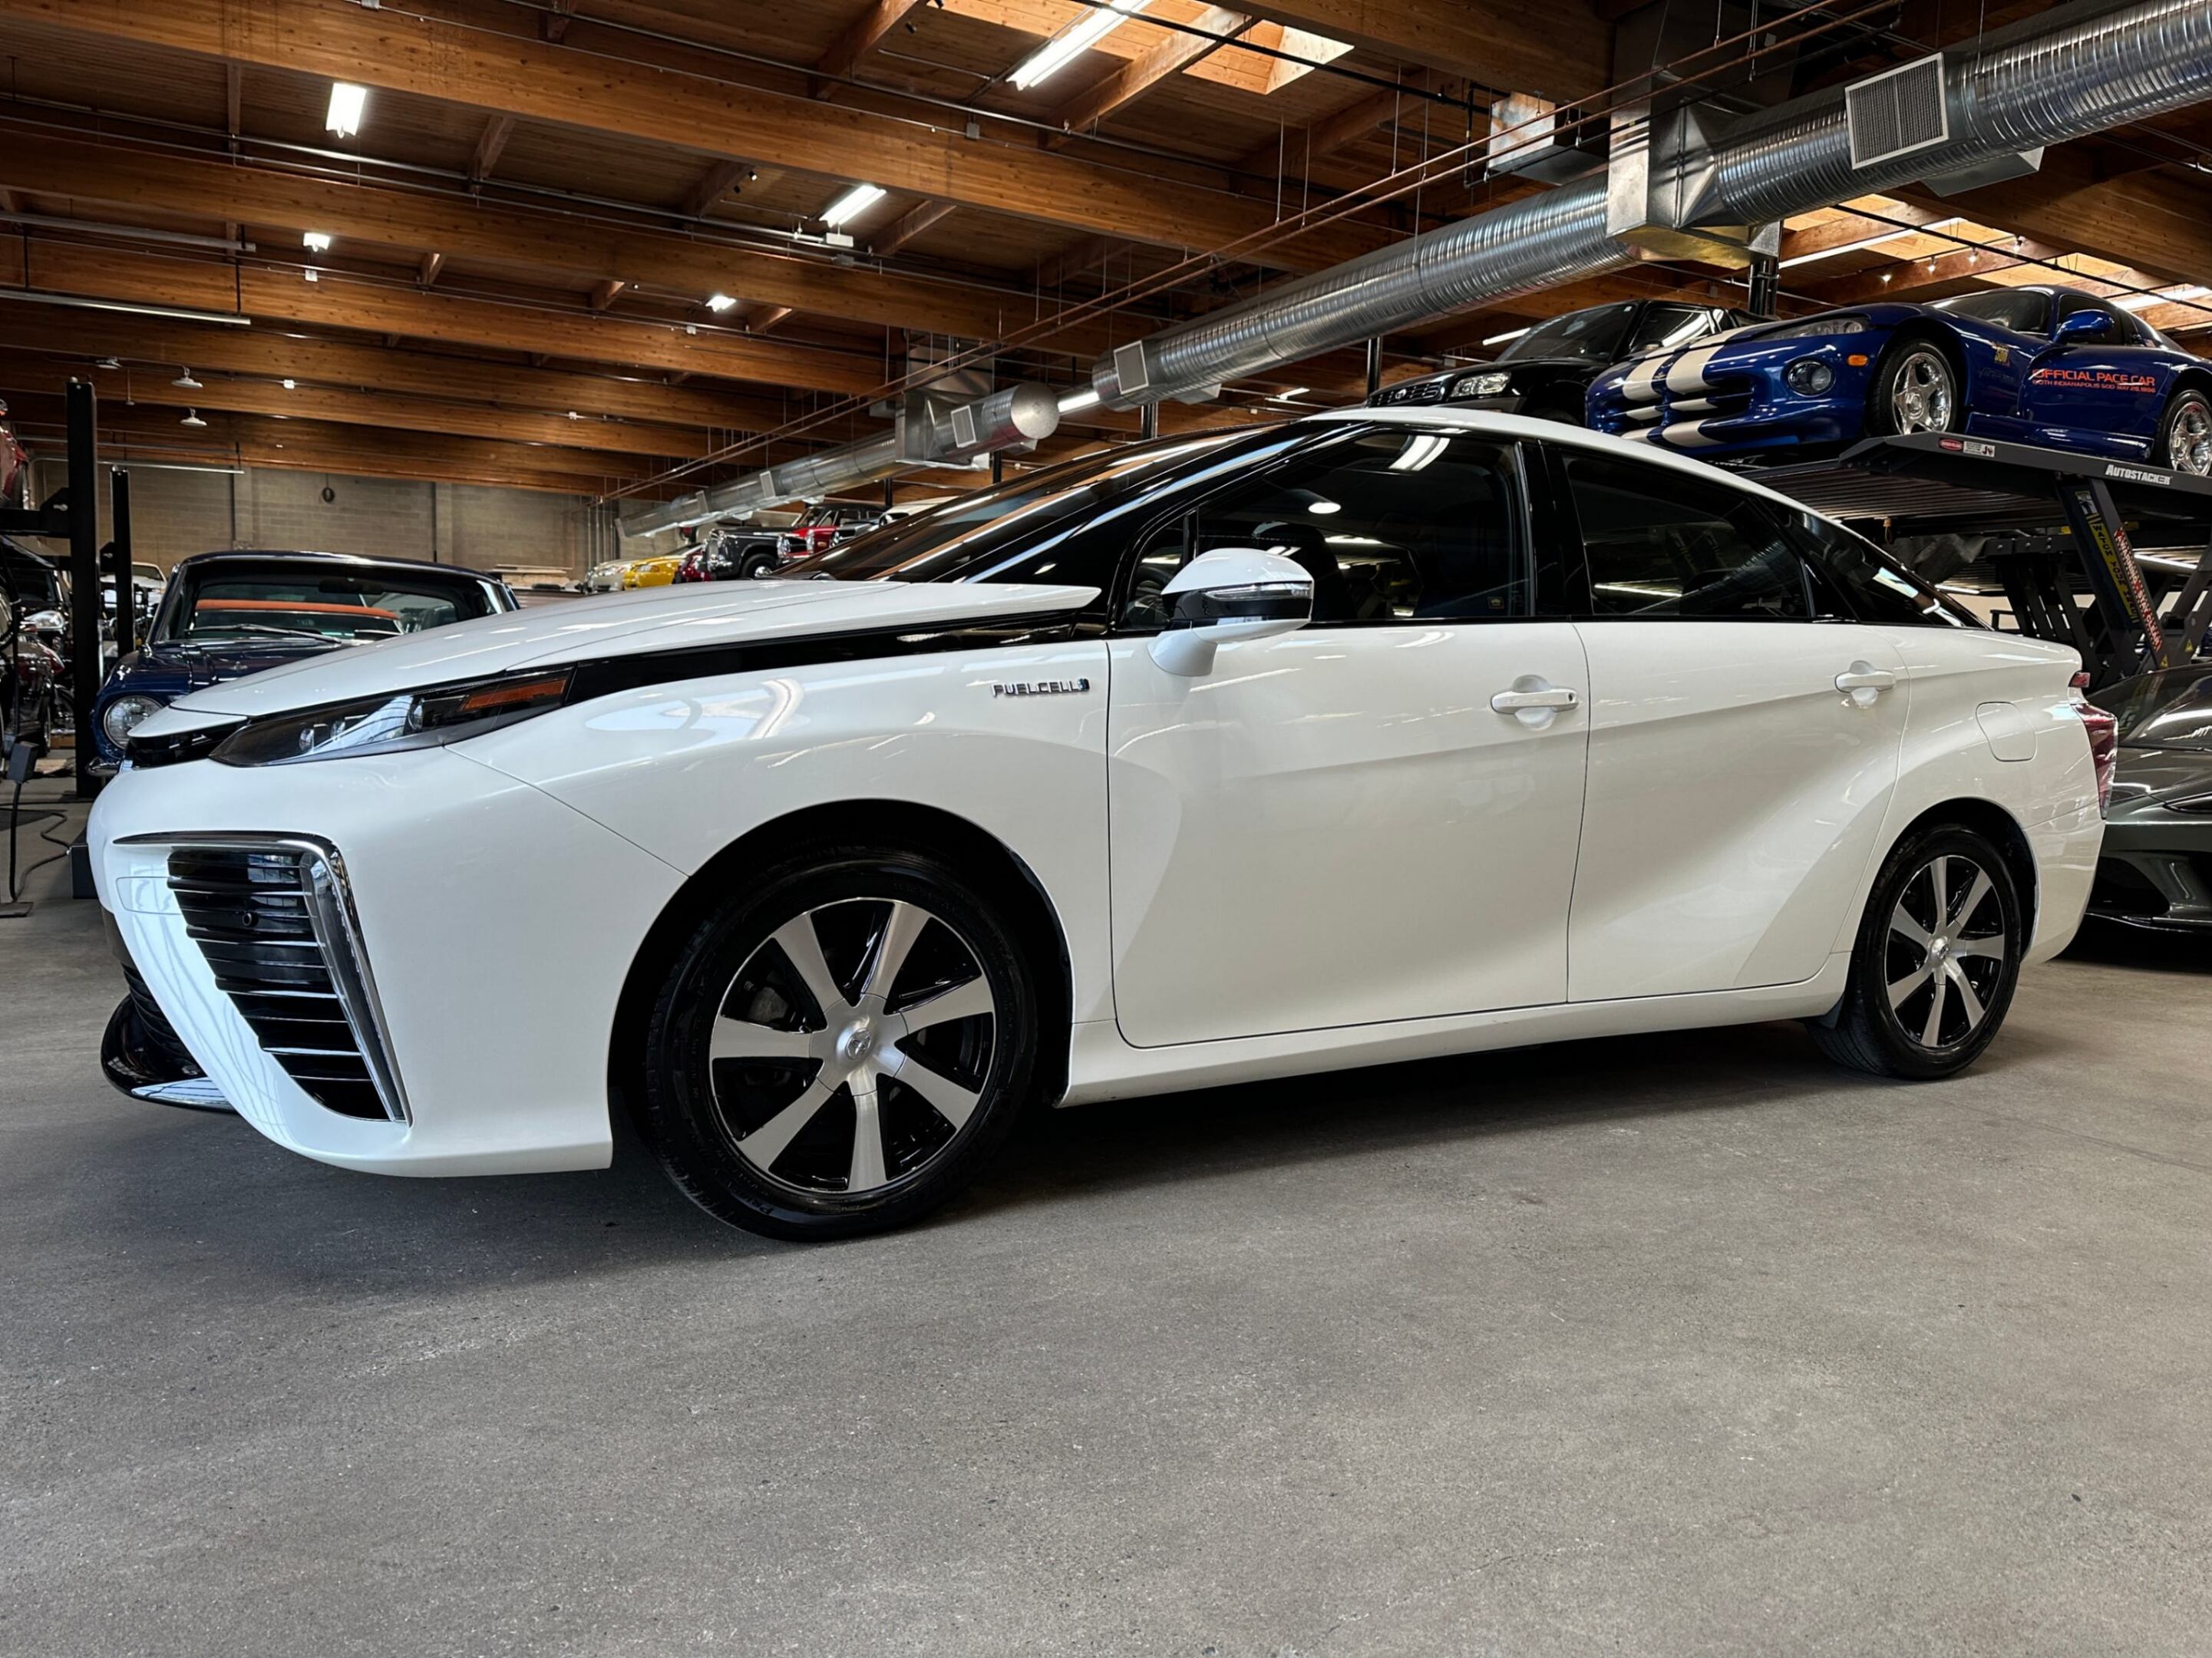 2020 Toyota Mirai Hydrogen Fuel Cell